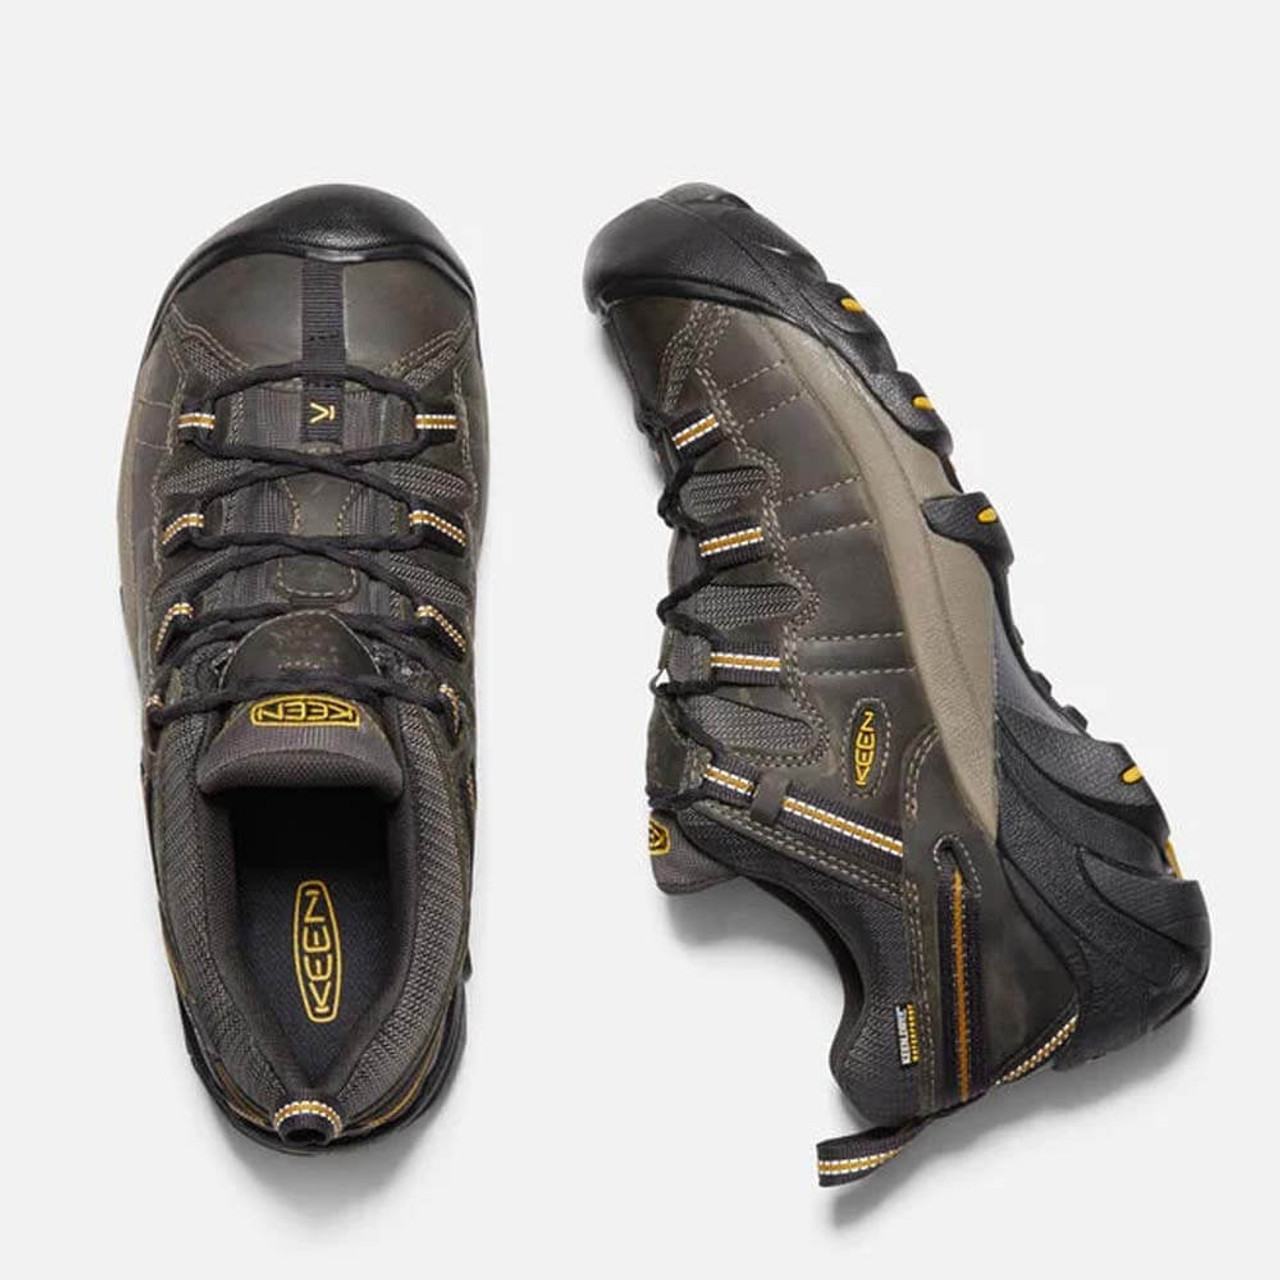 Men's Keen Targhee II Waterproof Shoe